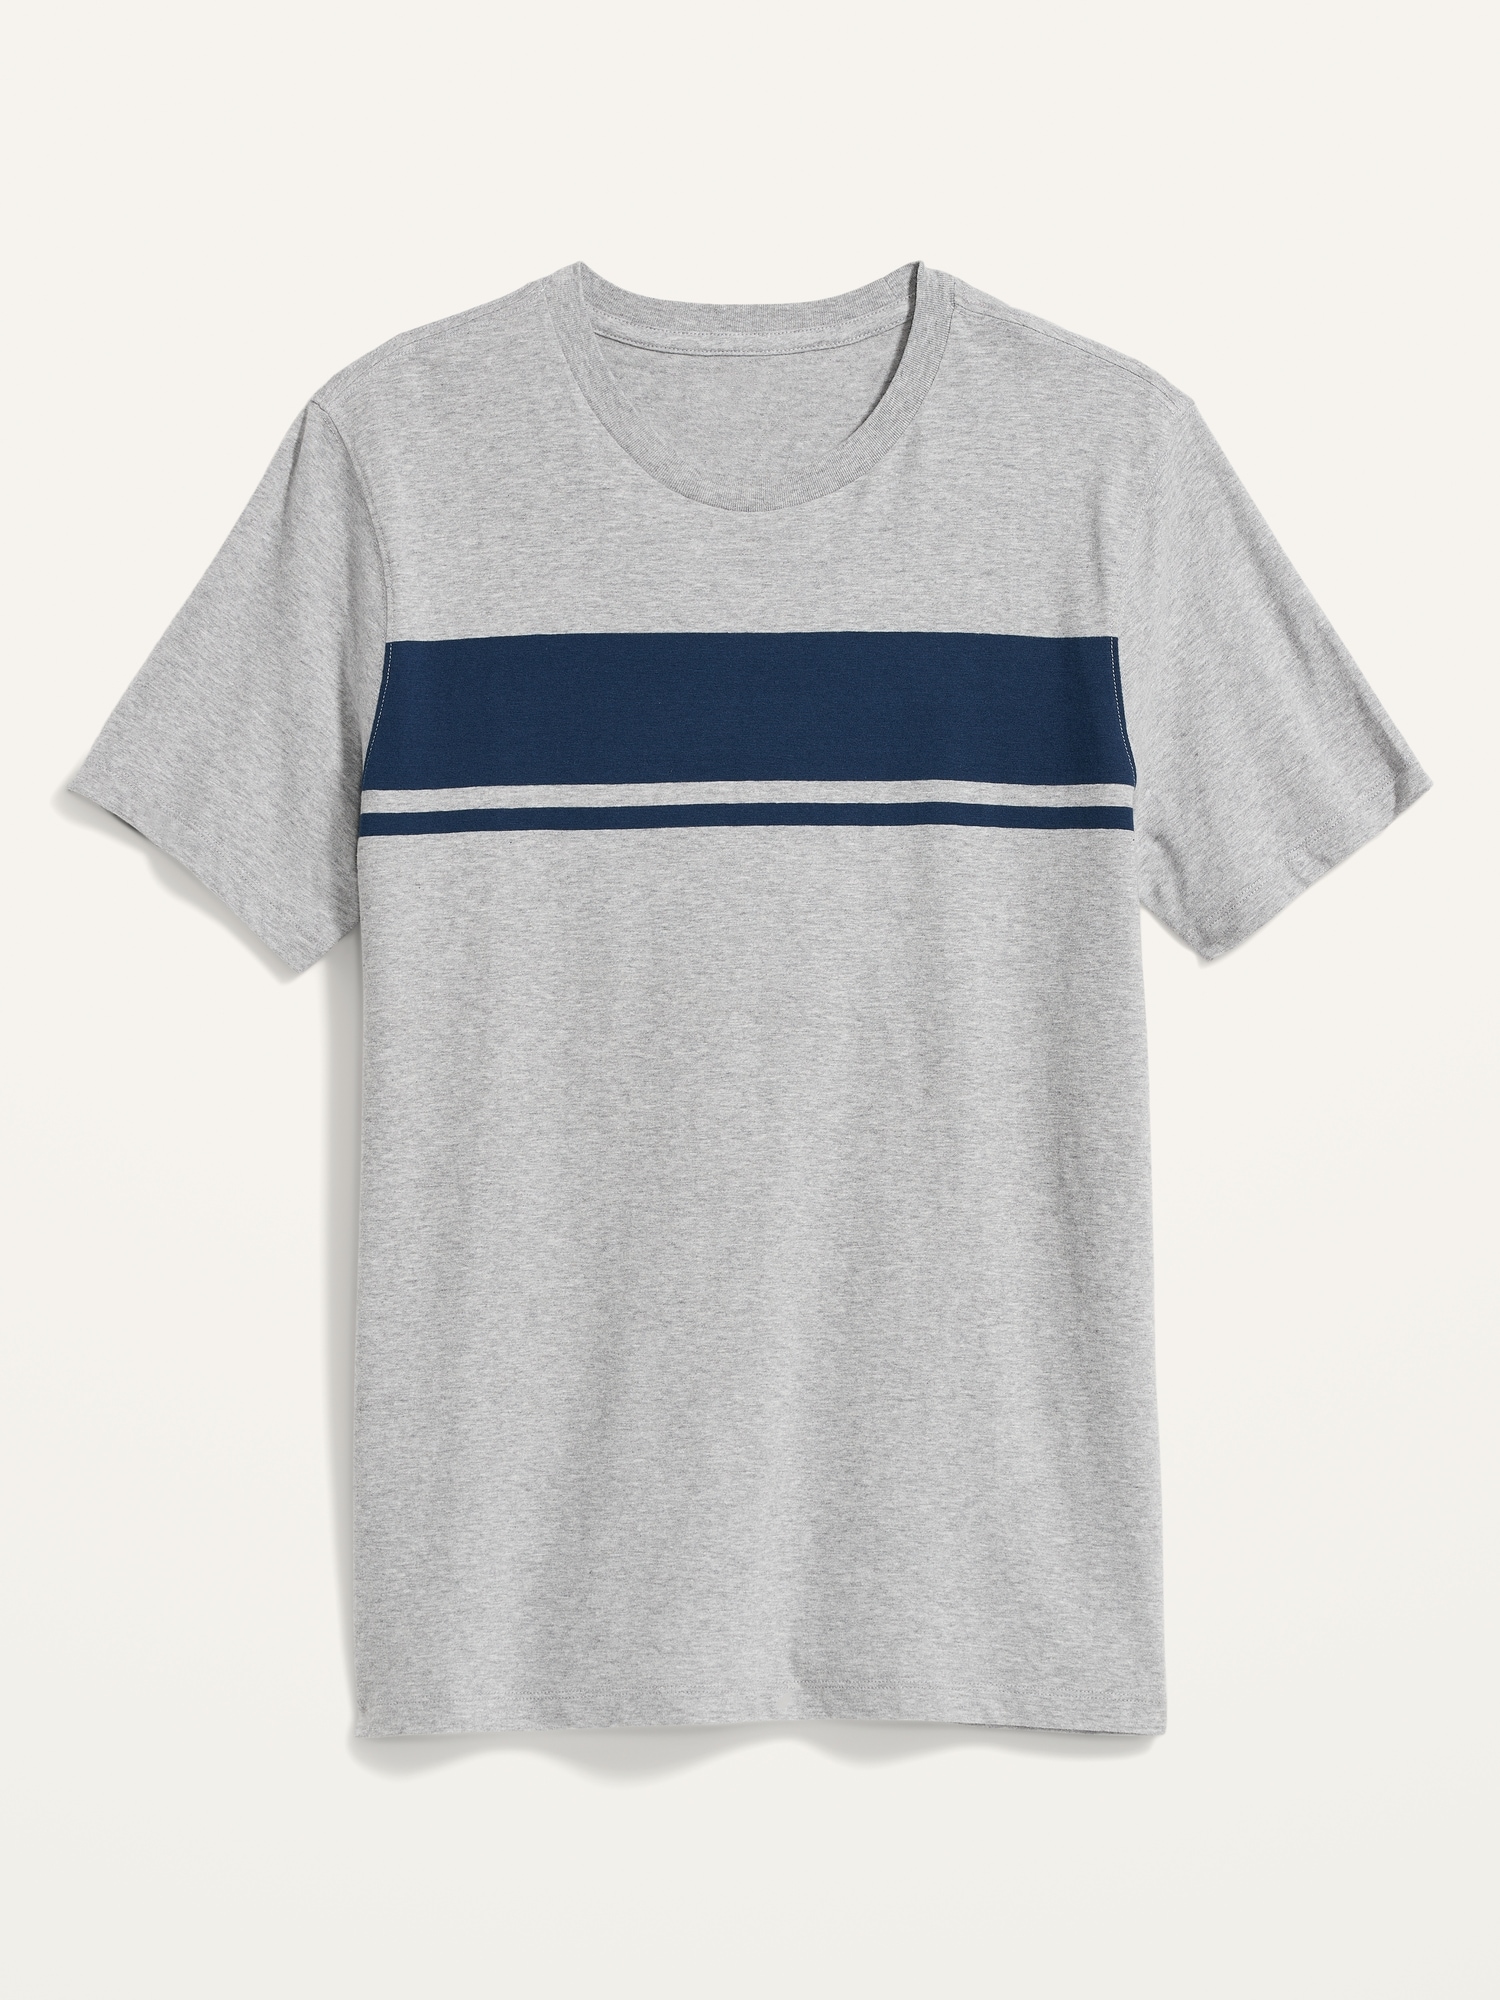 Old Navy Soft-Washed Center-Stripe T-Shirt for Men gray. 1